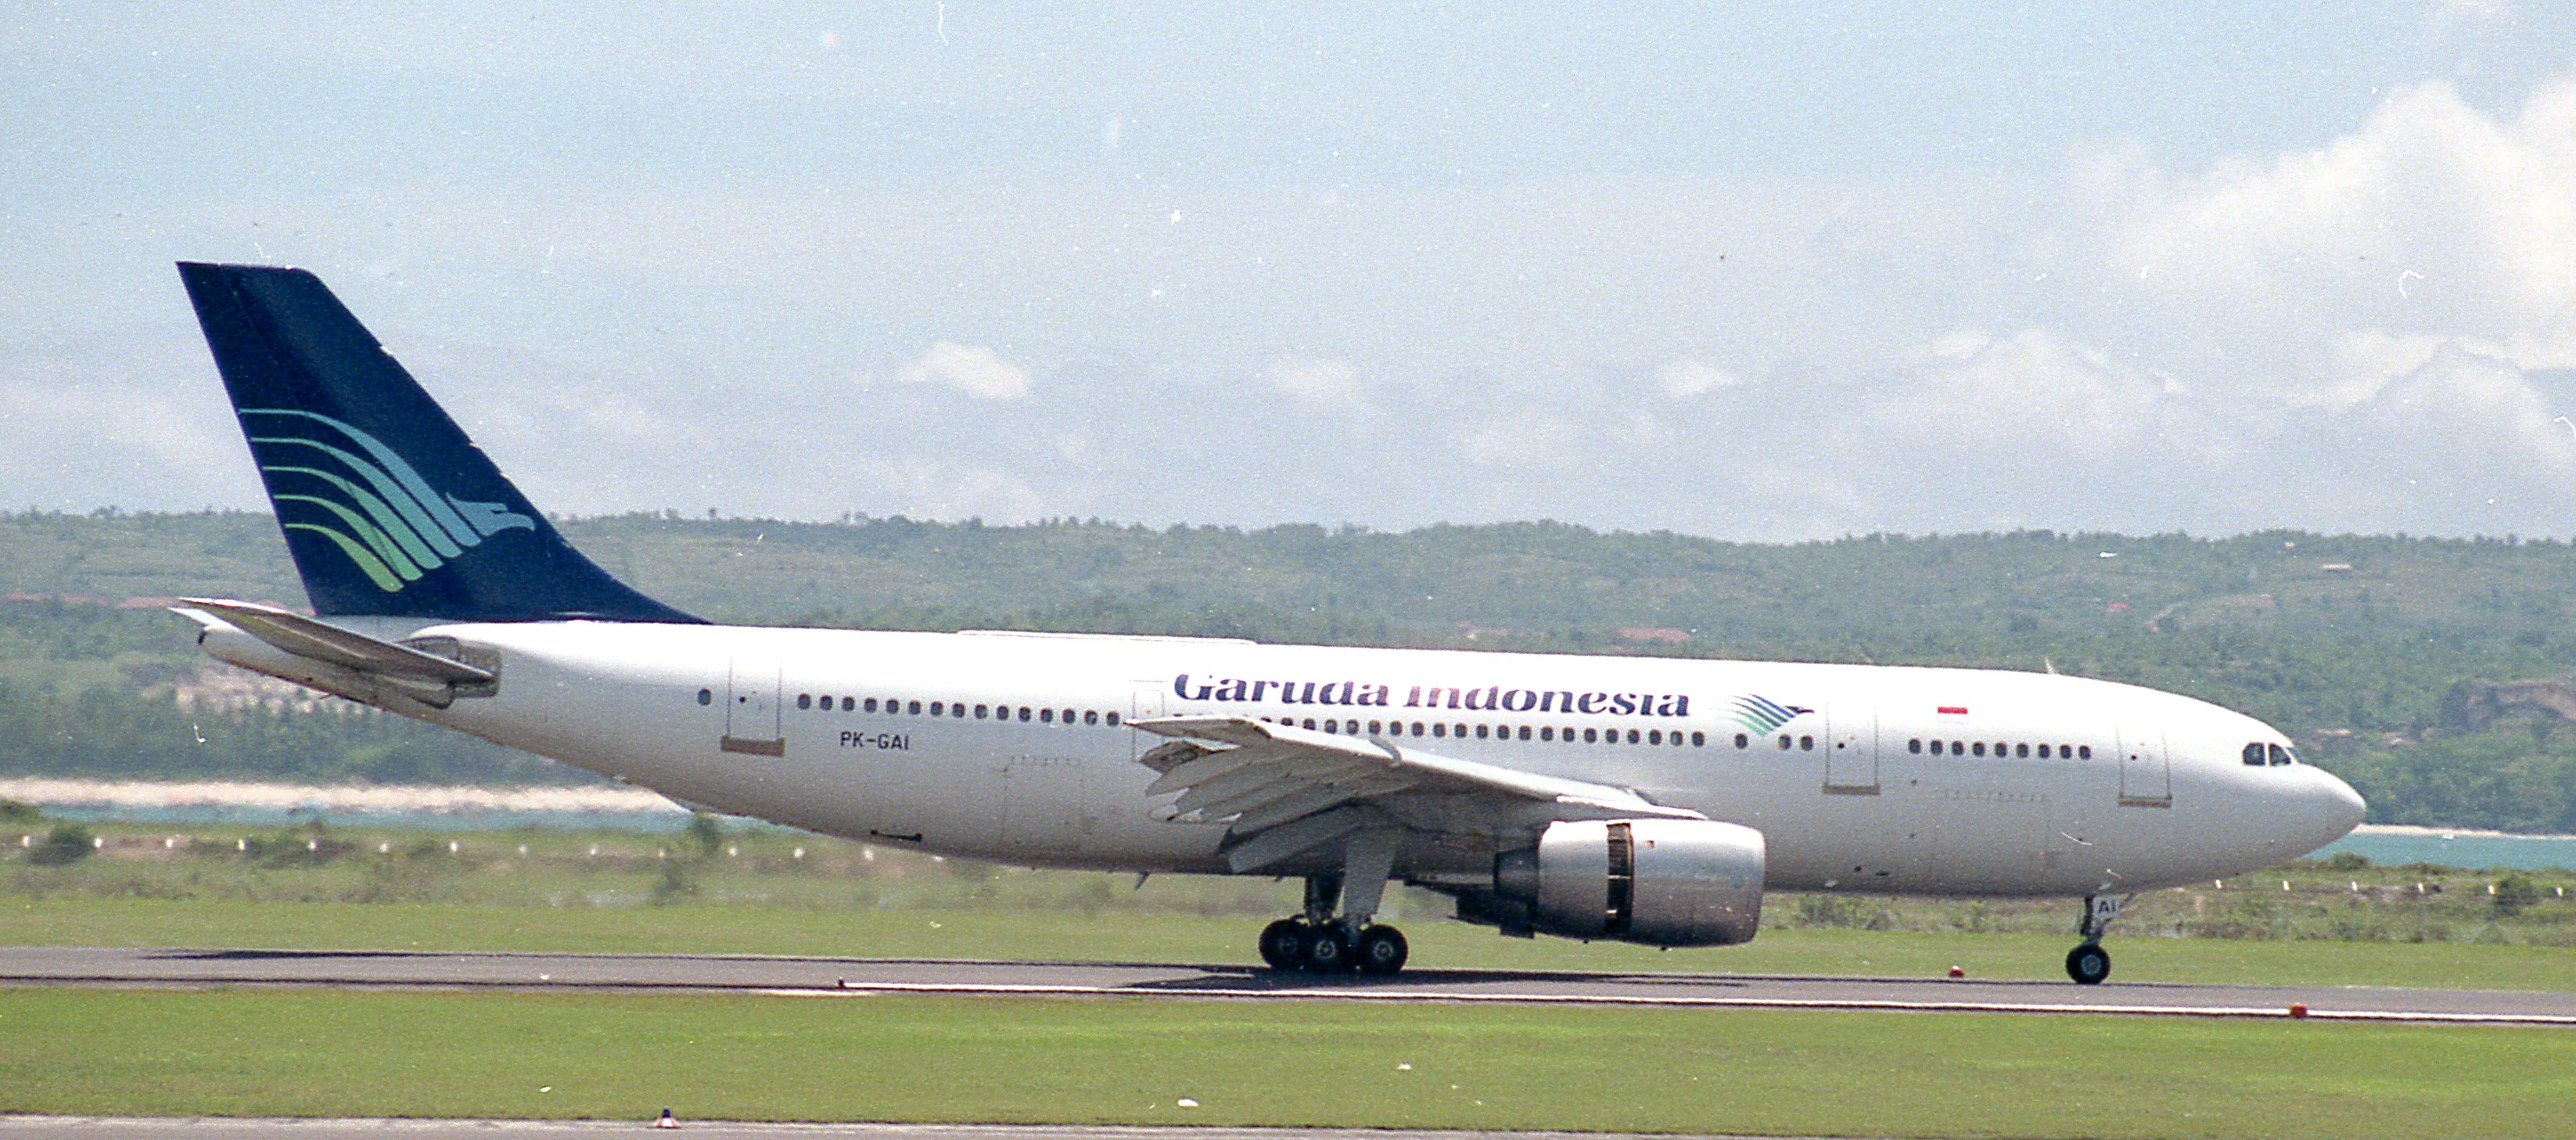 Garuda Indonesia Flight 152 - Wikipedia